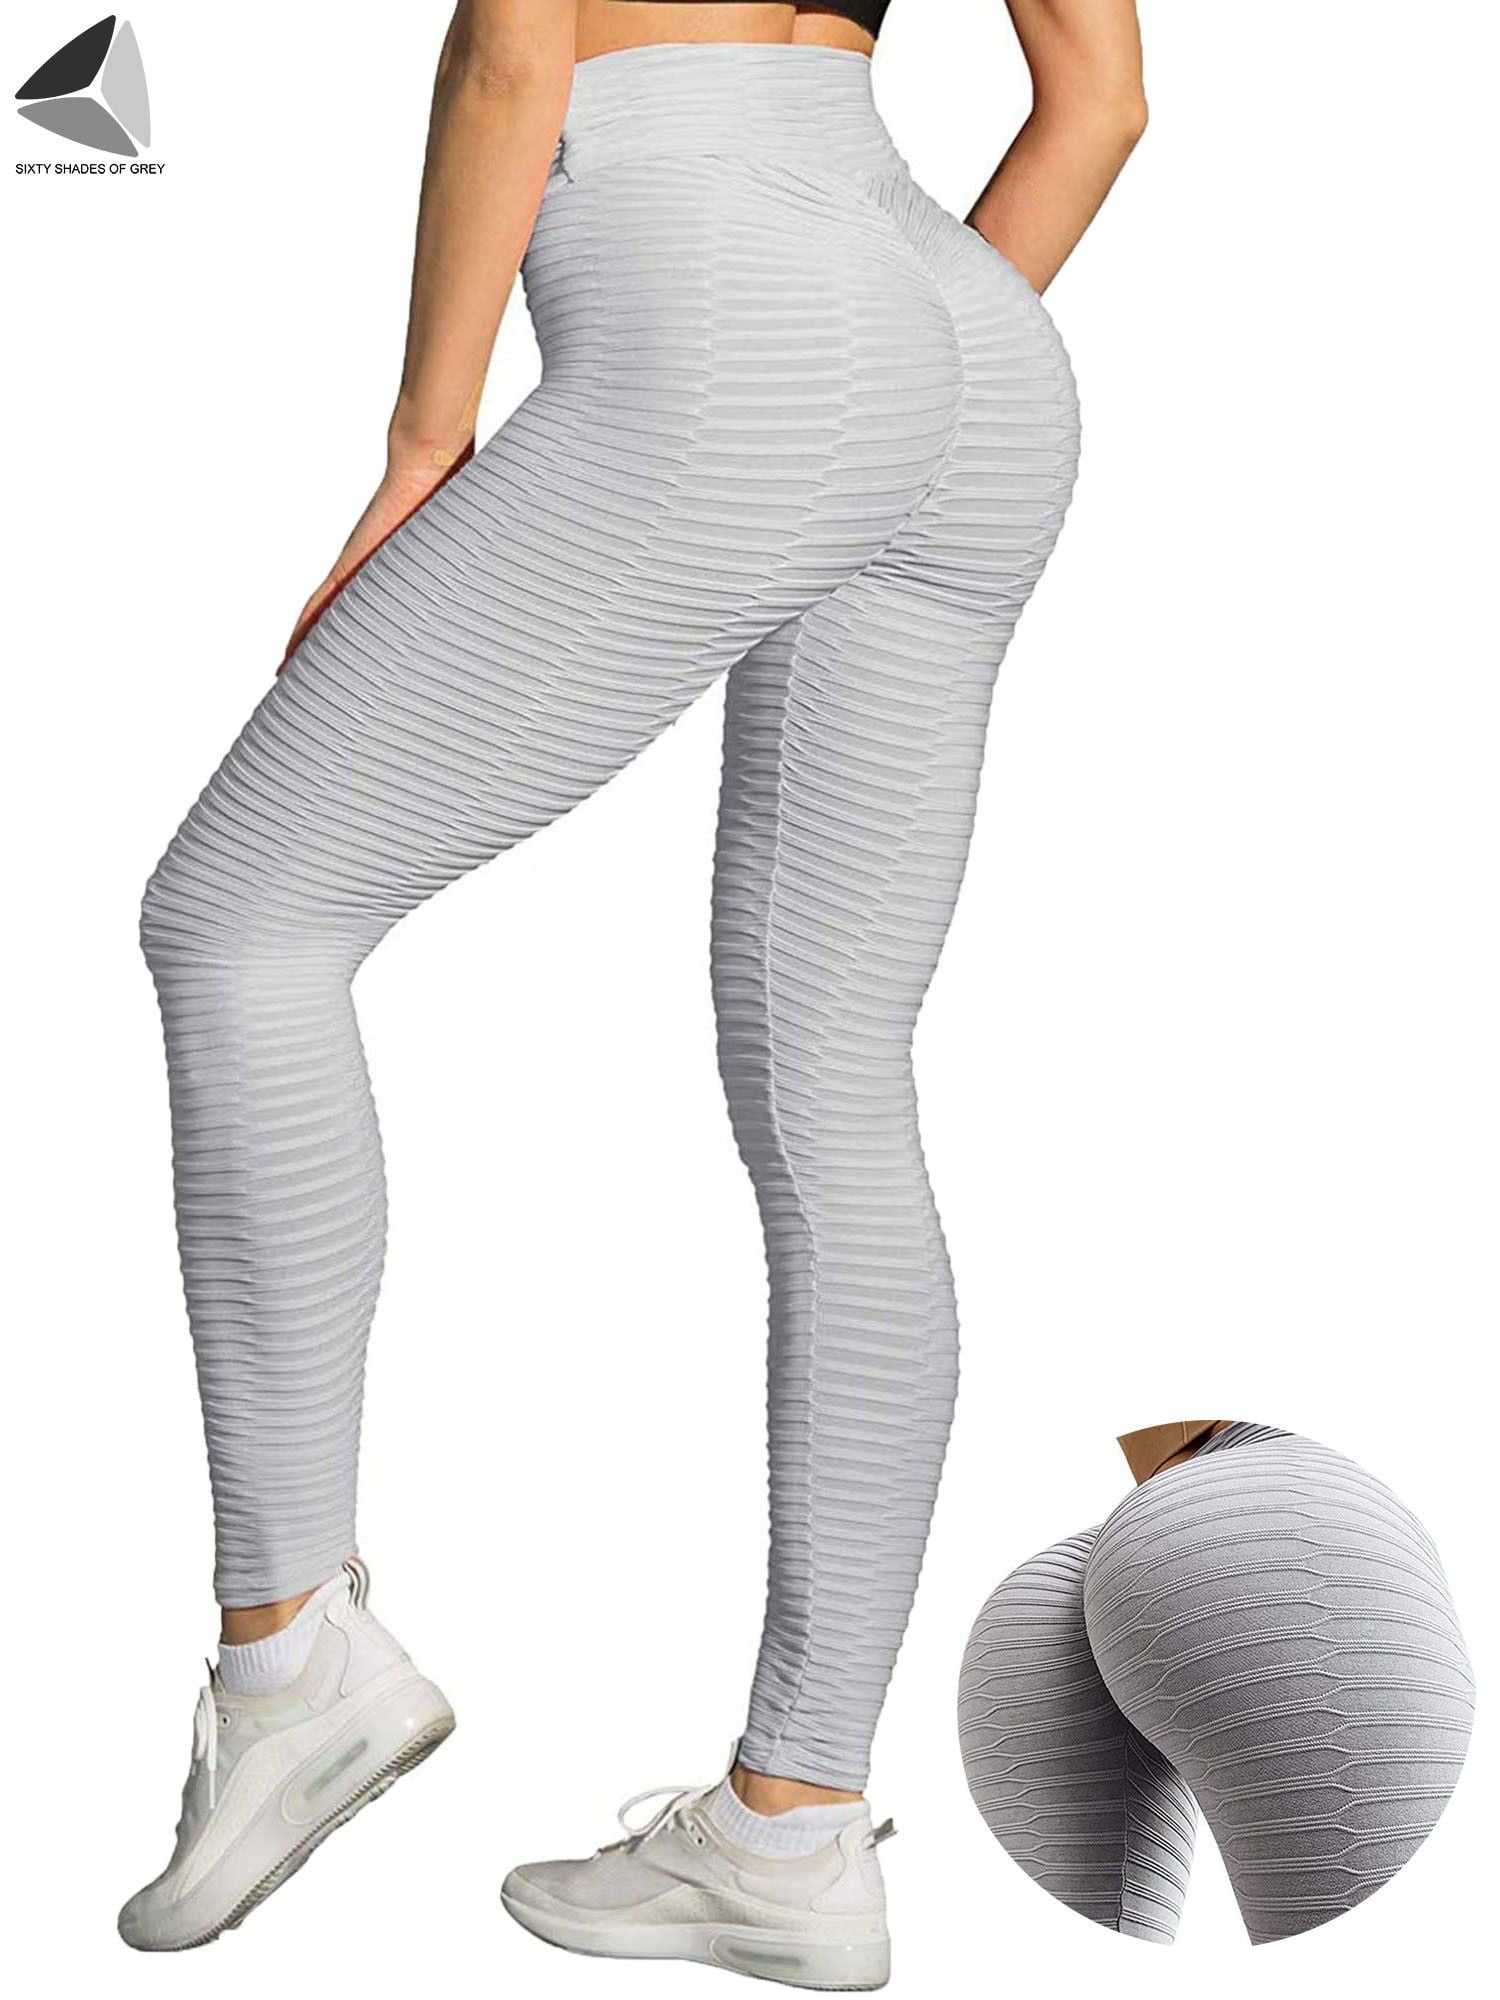 PULLIMORE Womens High Waist Leggings Textured Butt Lifting Shaping Capri  Workout Yoga Fitness Slimming Pants (S, Gray) 